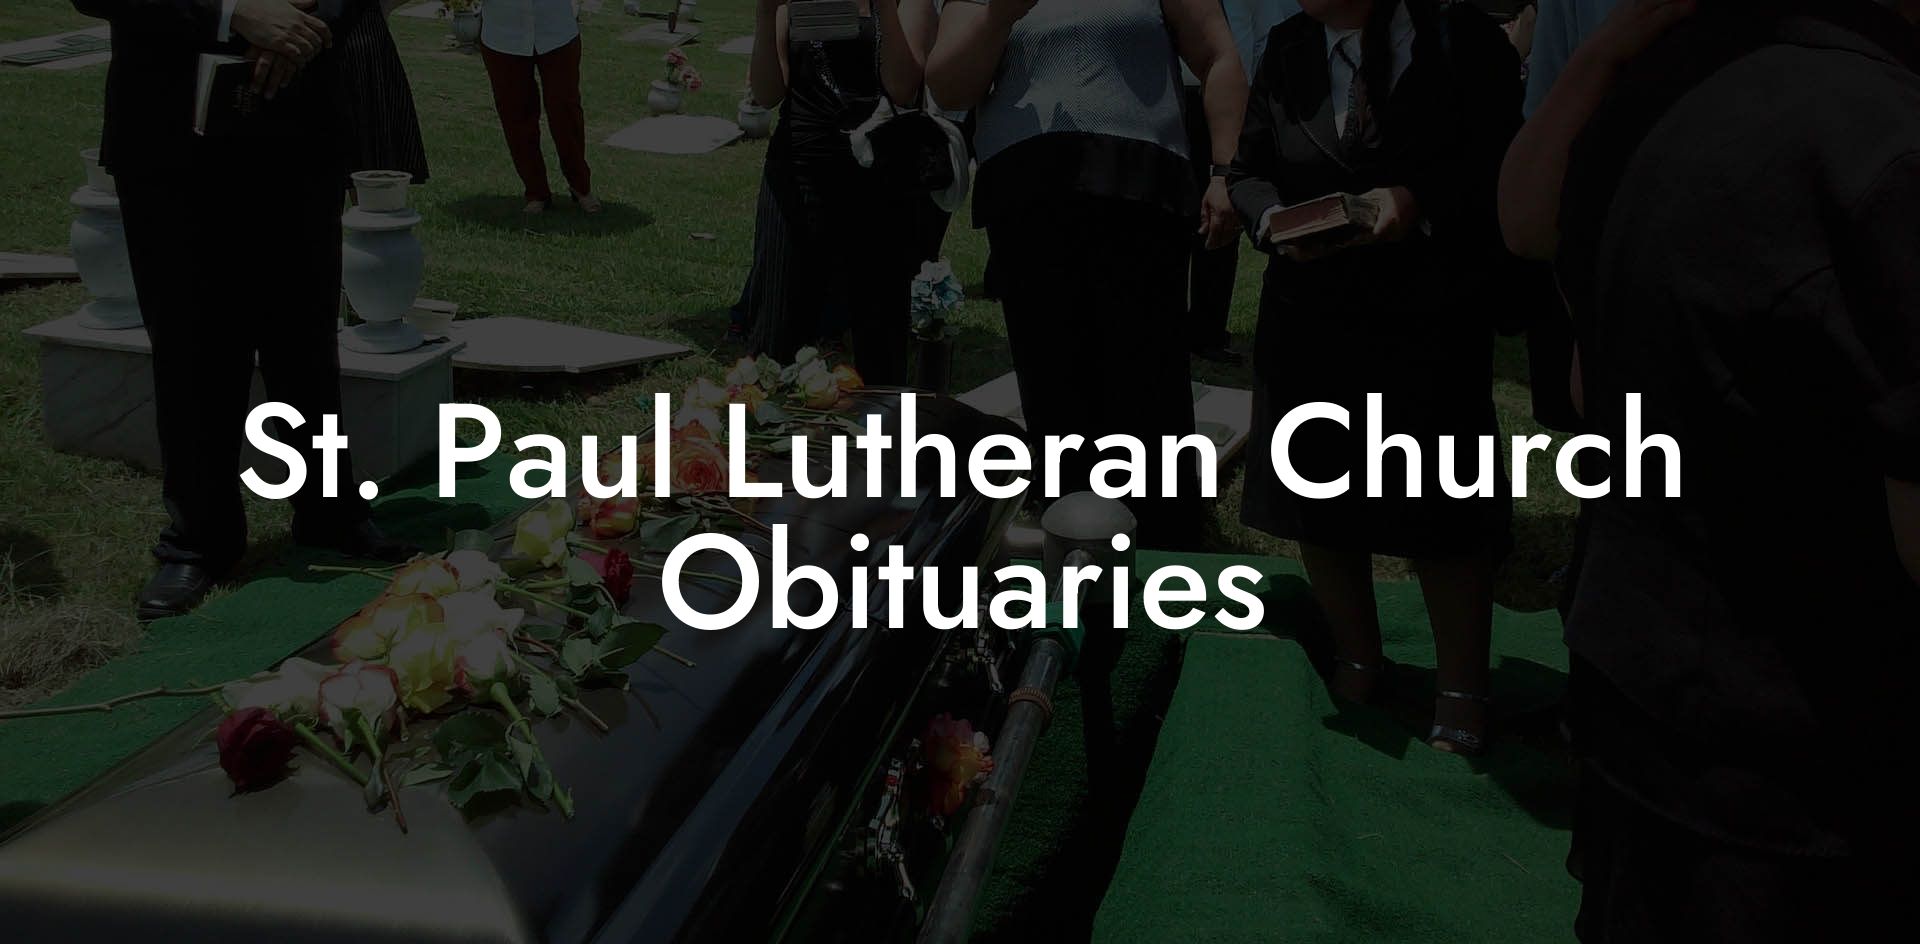 St. Paul Lutheran Church Obituaries